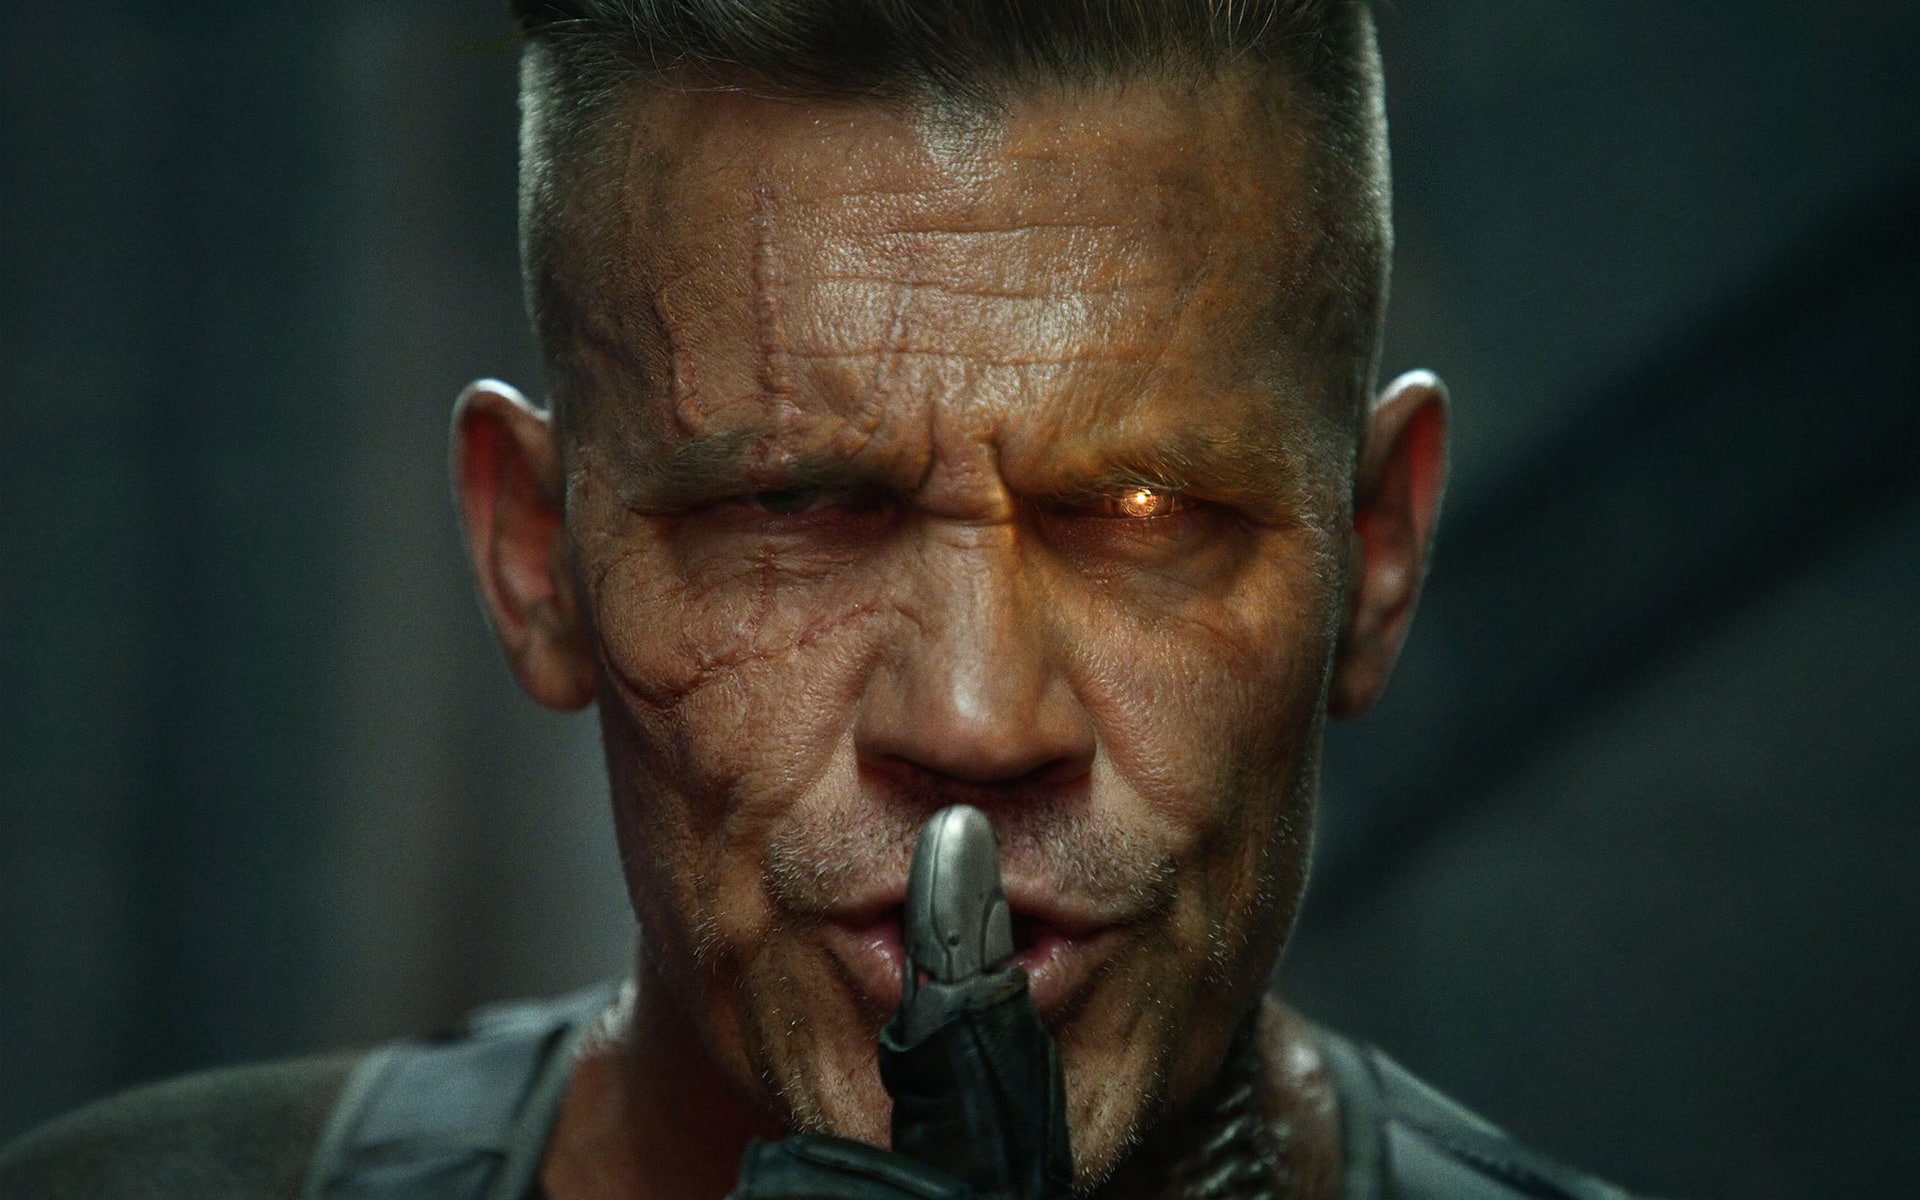 Josh Brolin as Cable in Deadpool 2, portrait, headshot, one person